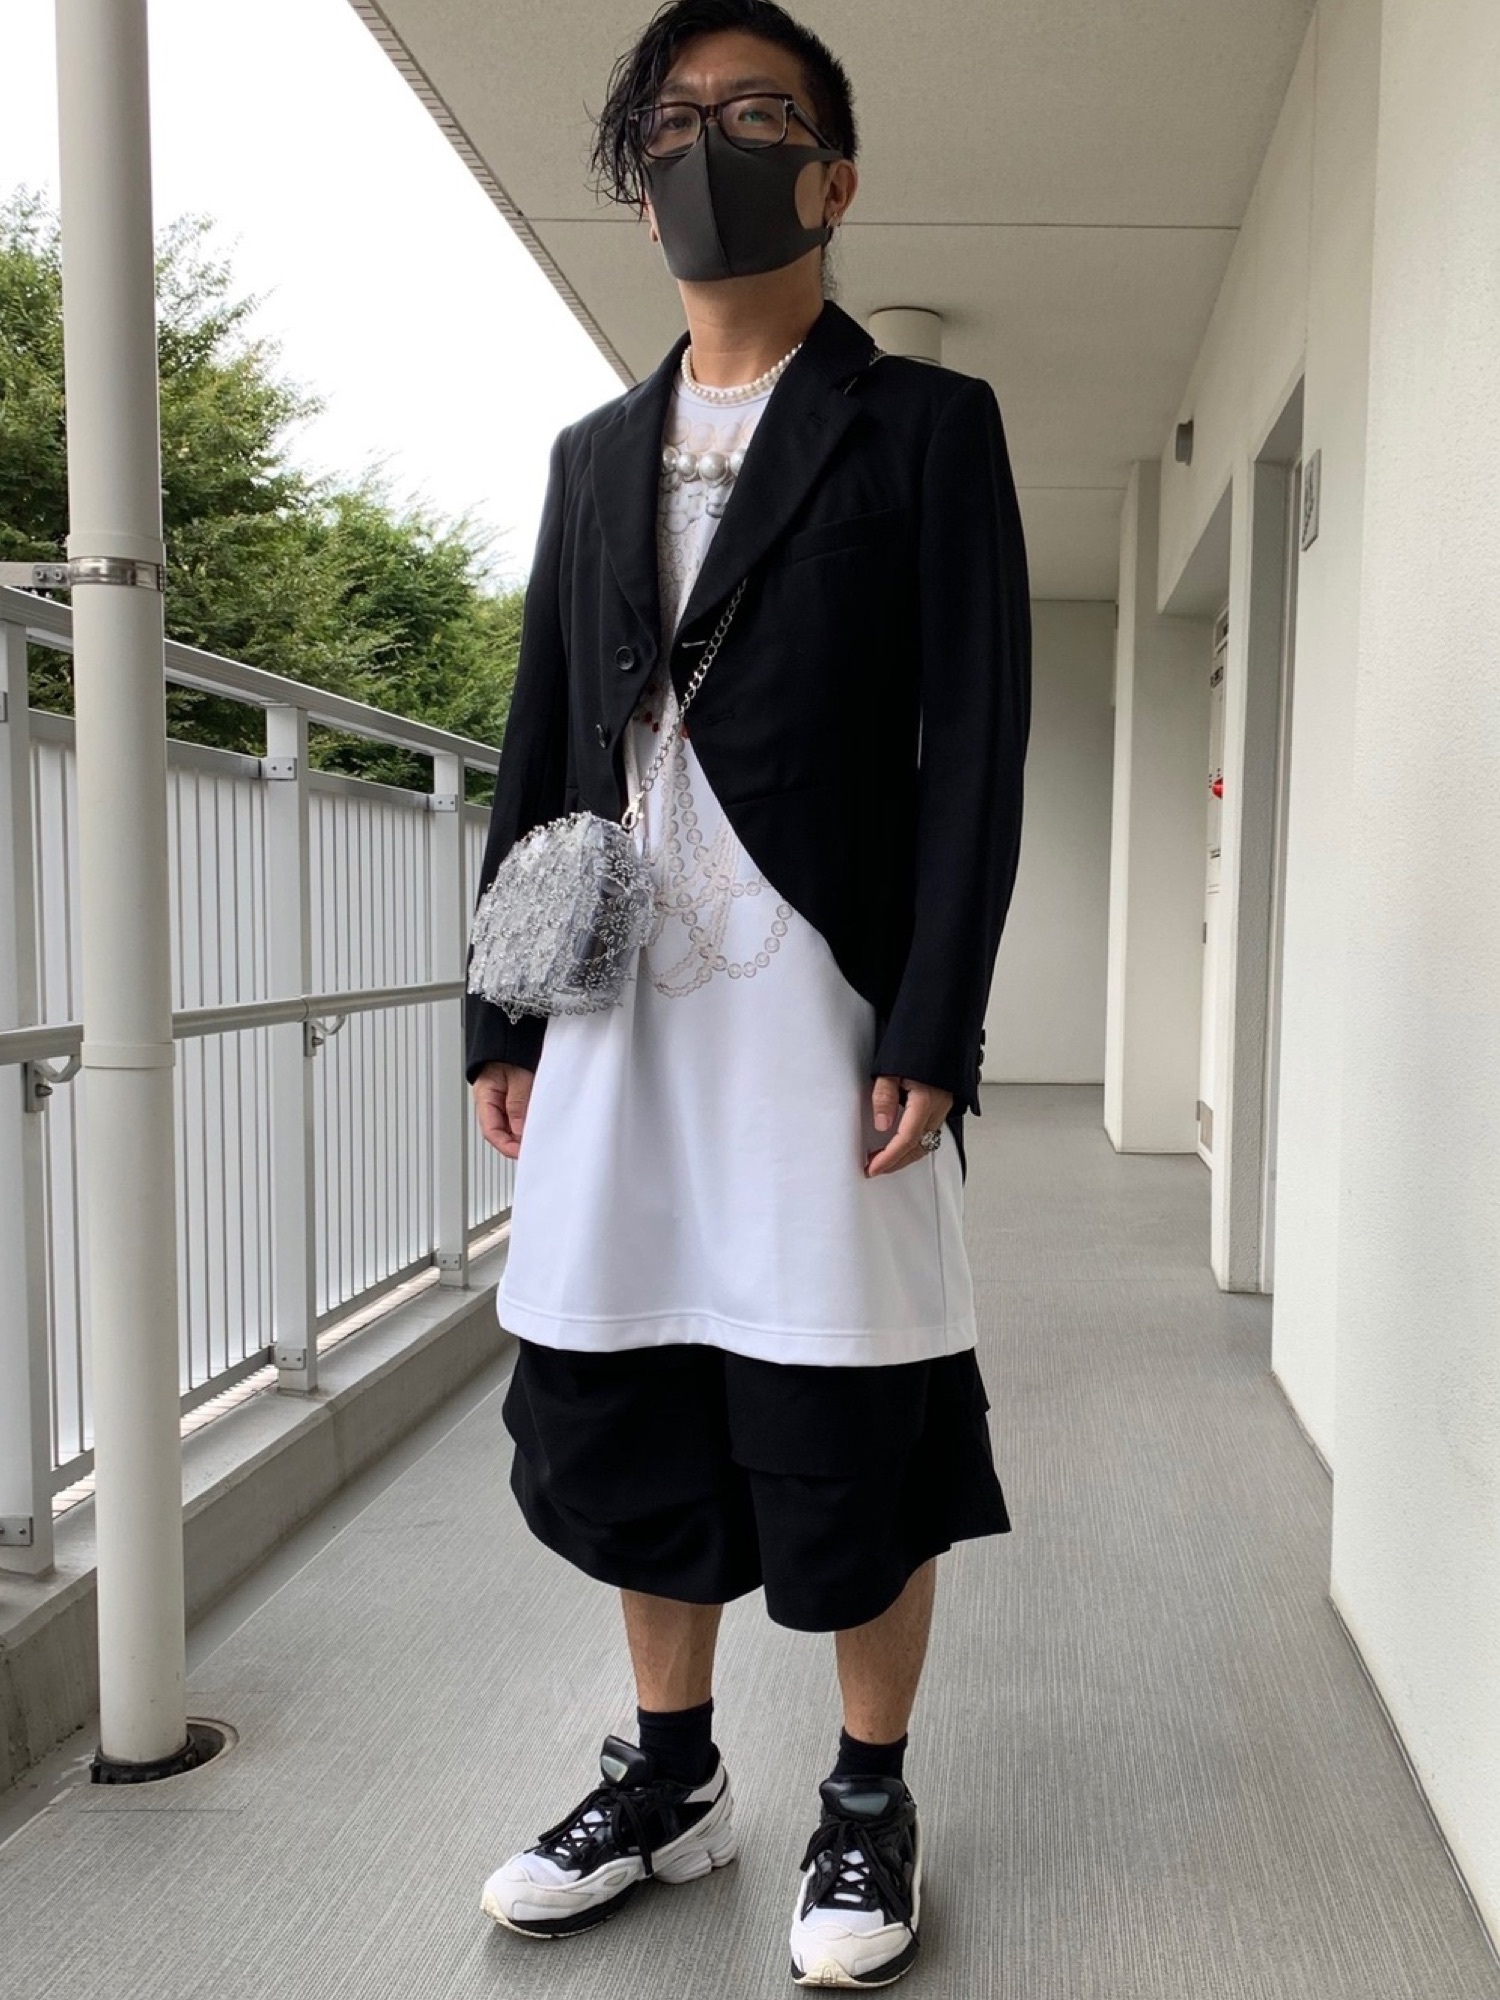 noir kei ninomiyaのバッグを使った人気ファッションコーディネート 